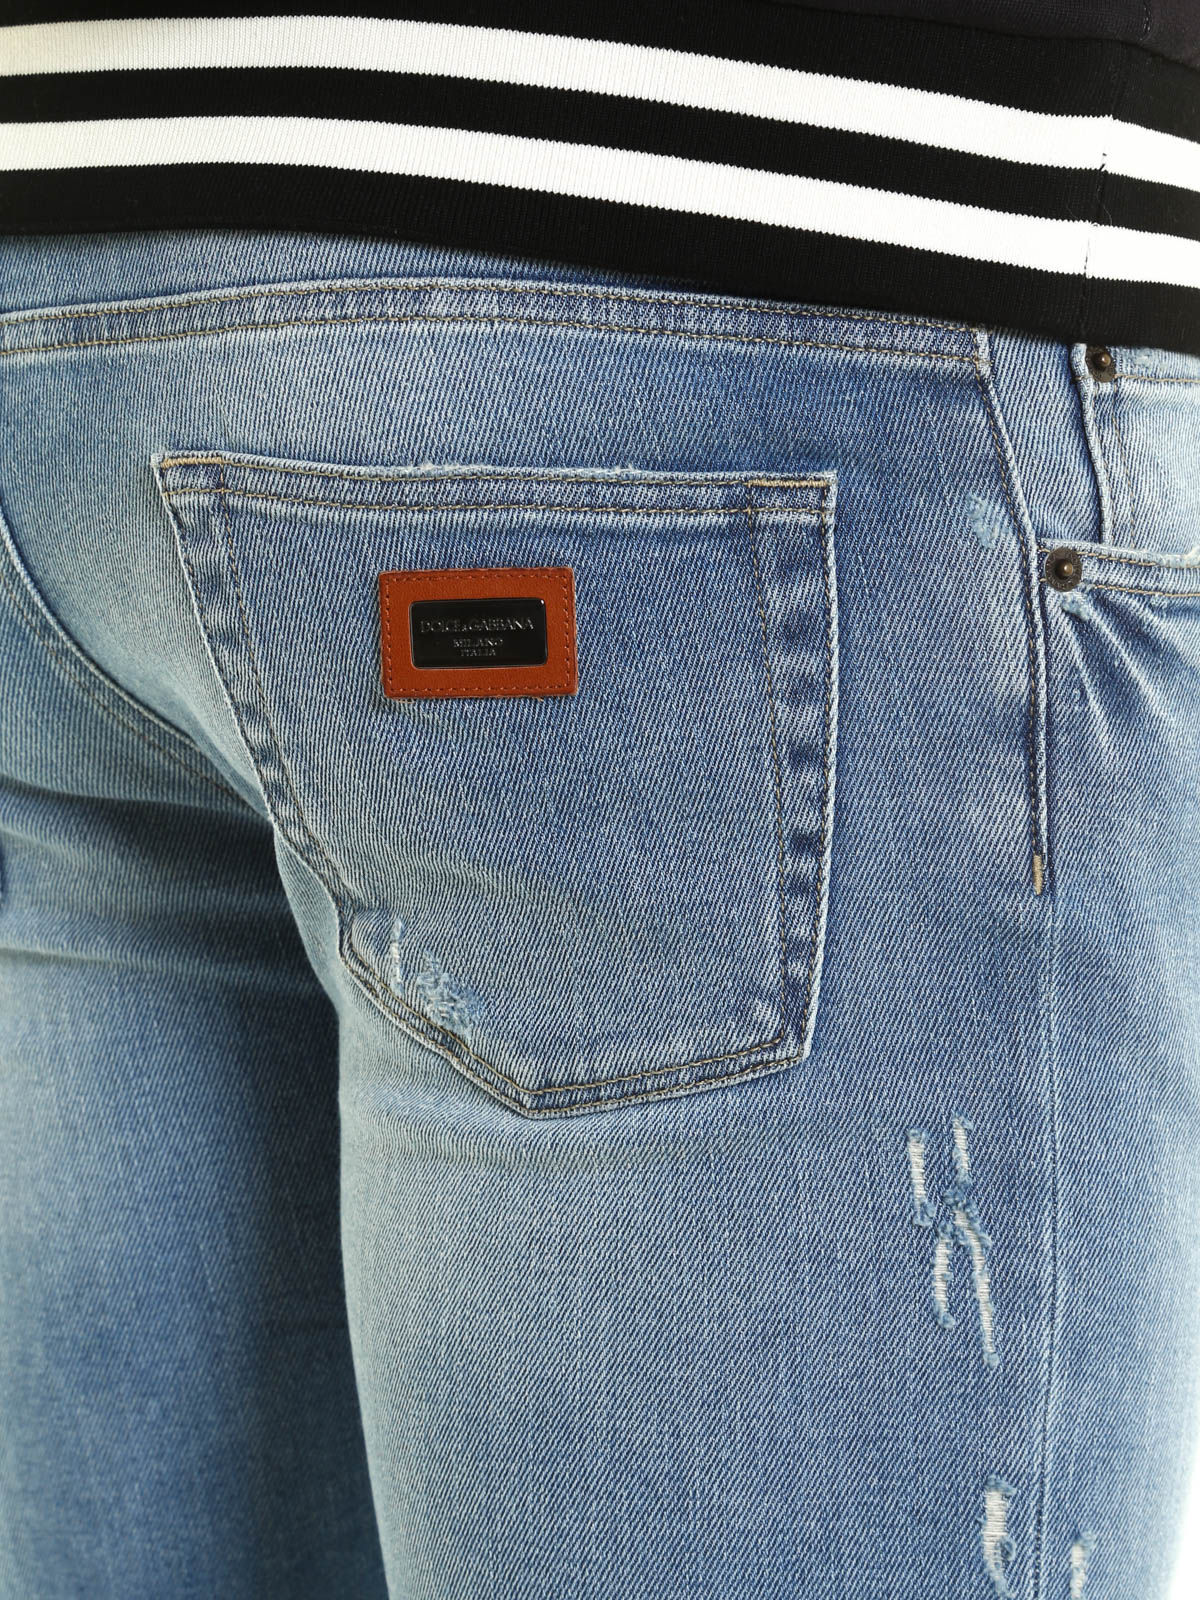 Idool Bulk Ongewapend Skinny jeans Dolce & Gabbana - Destroyed classic jeans - G6XOLDG8U49S9001